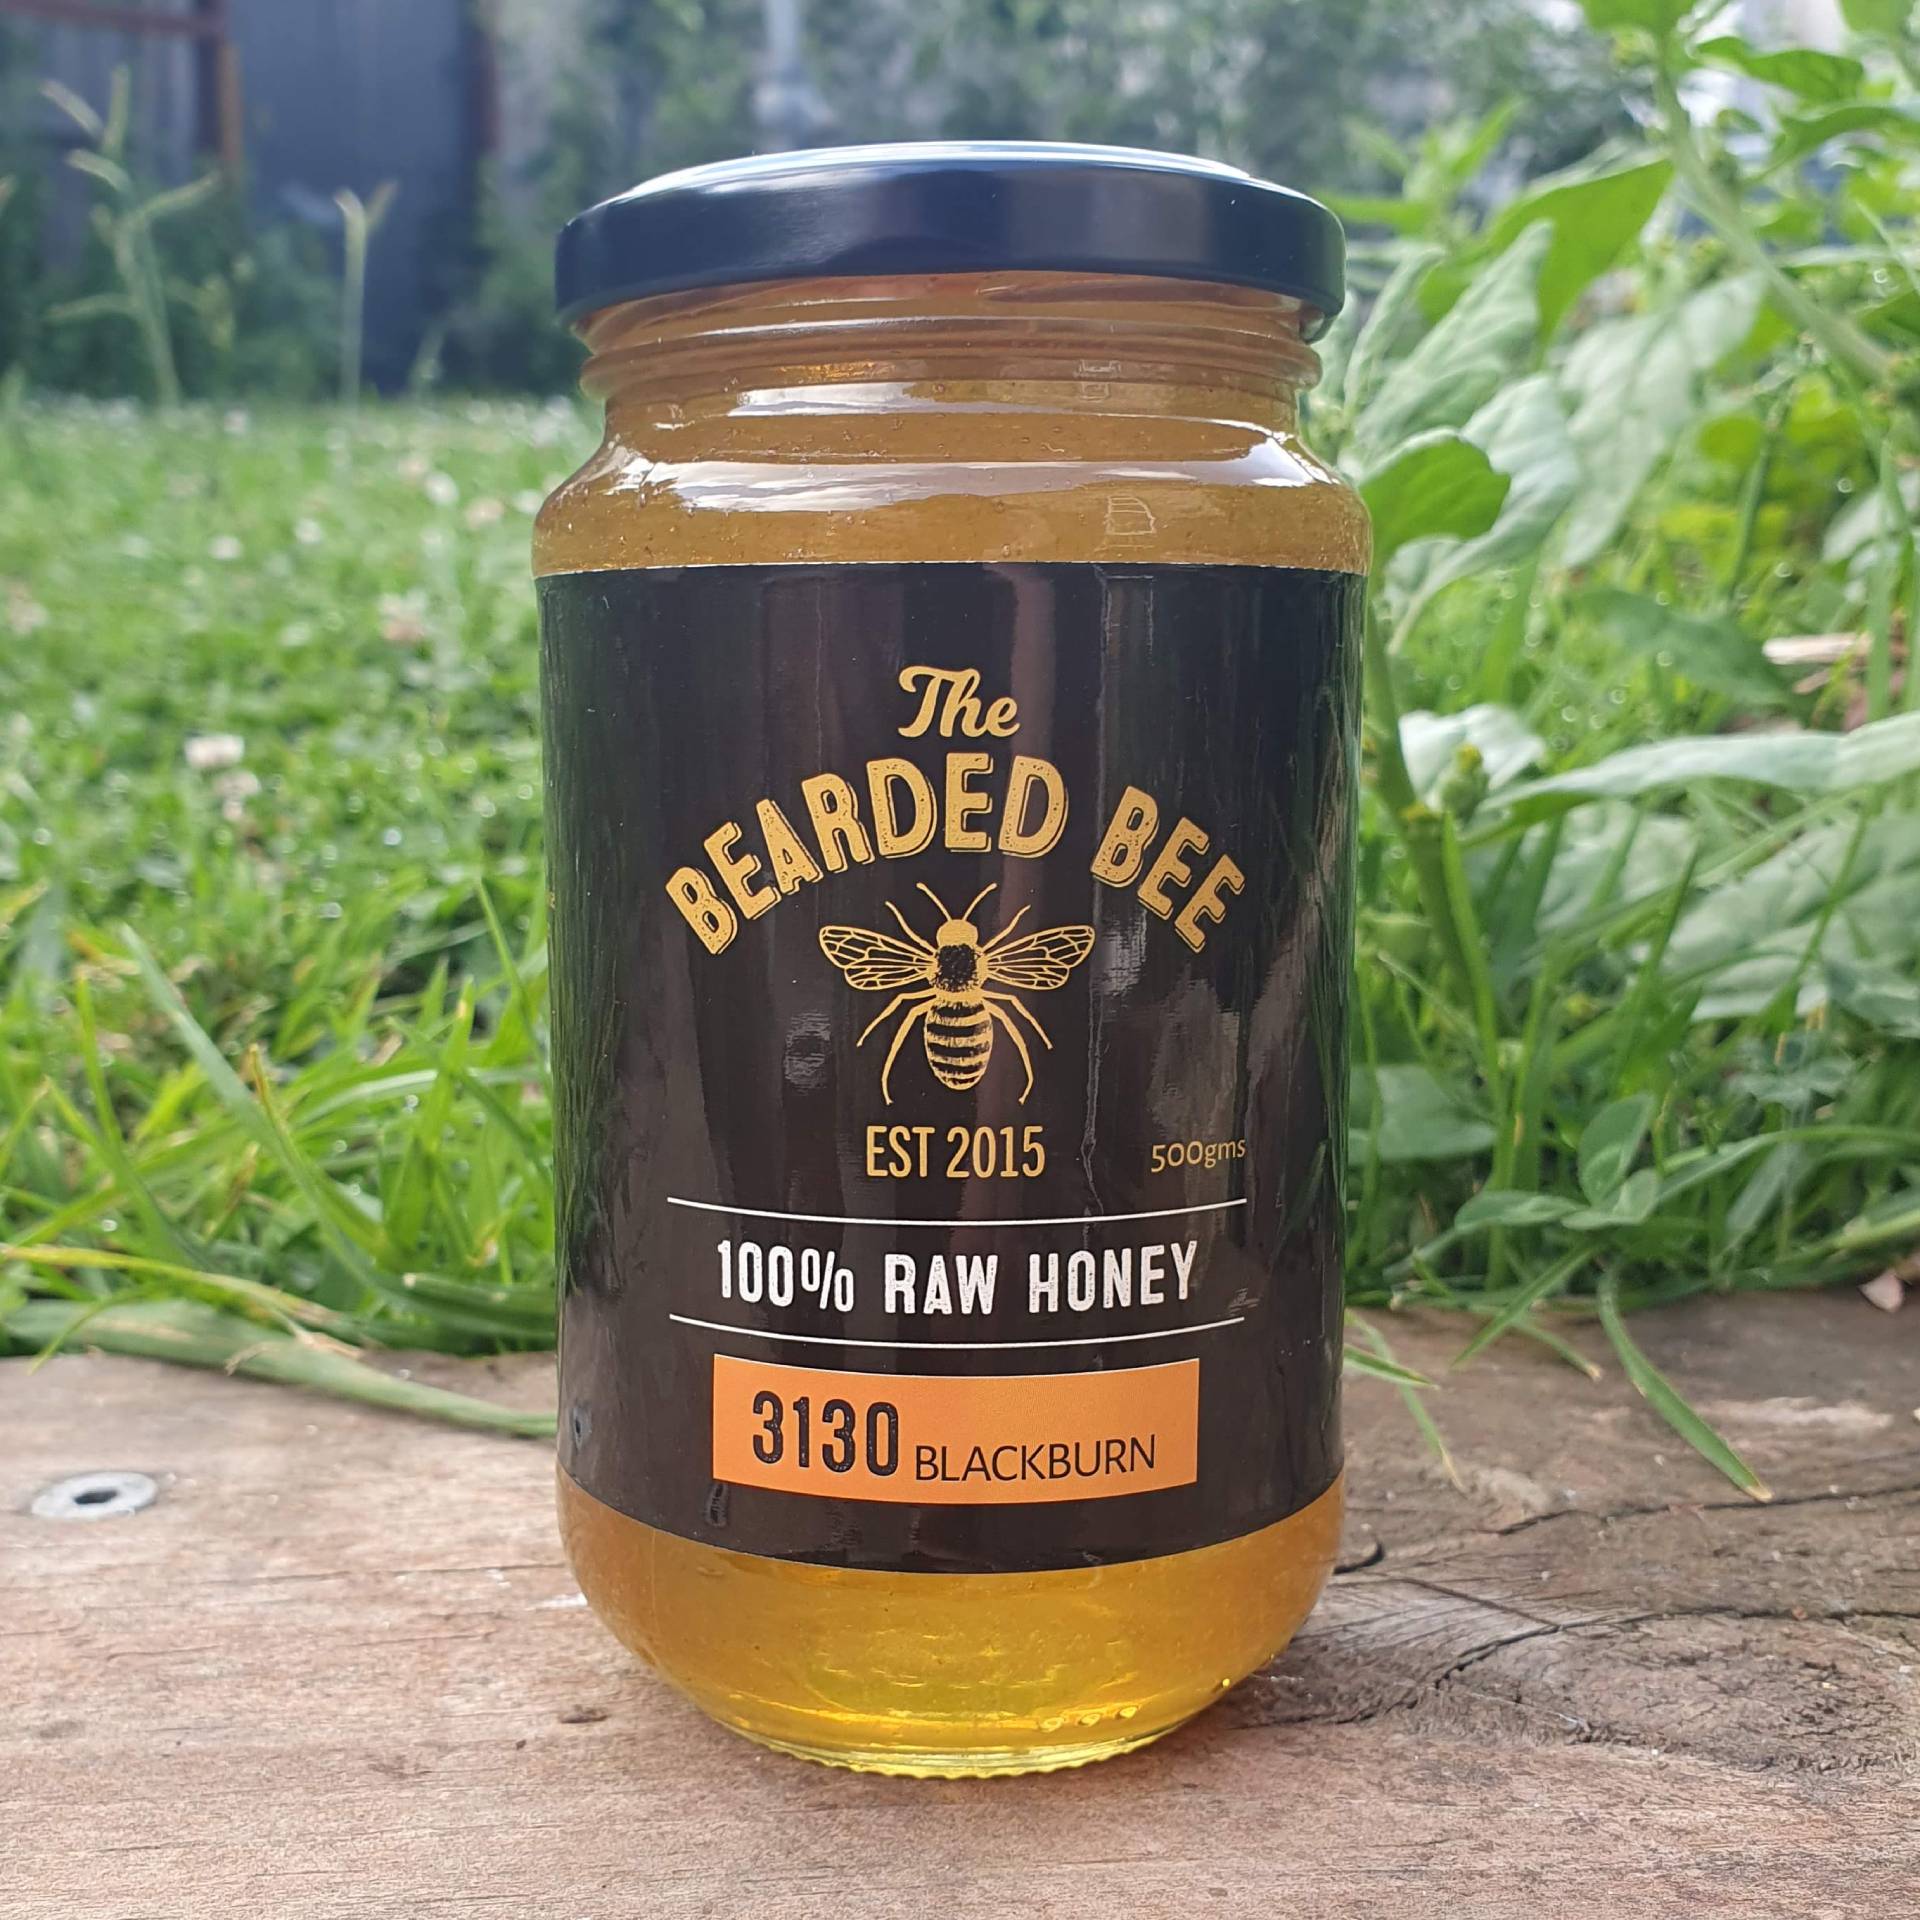 Blackburn honey